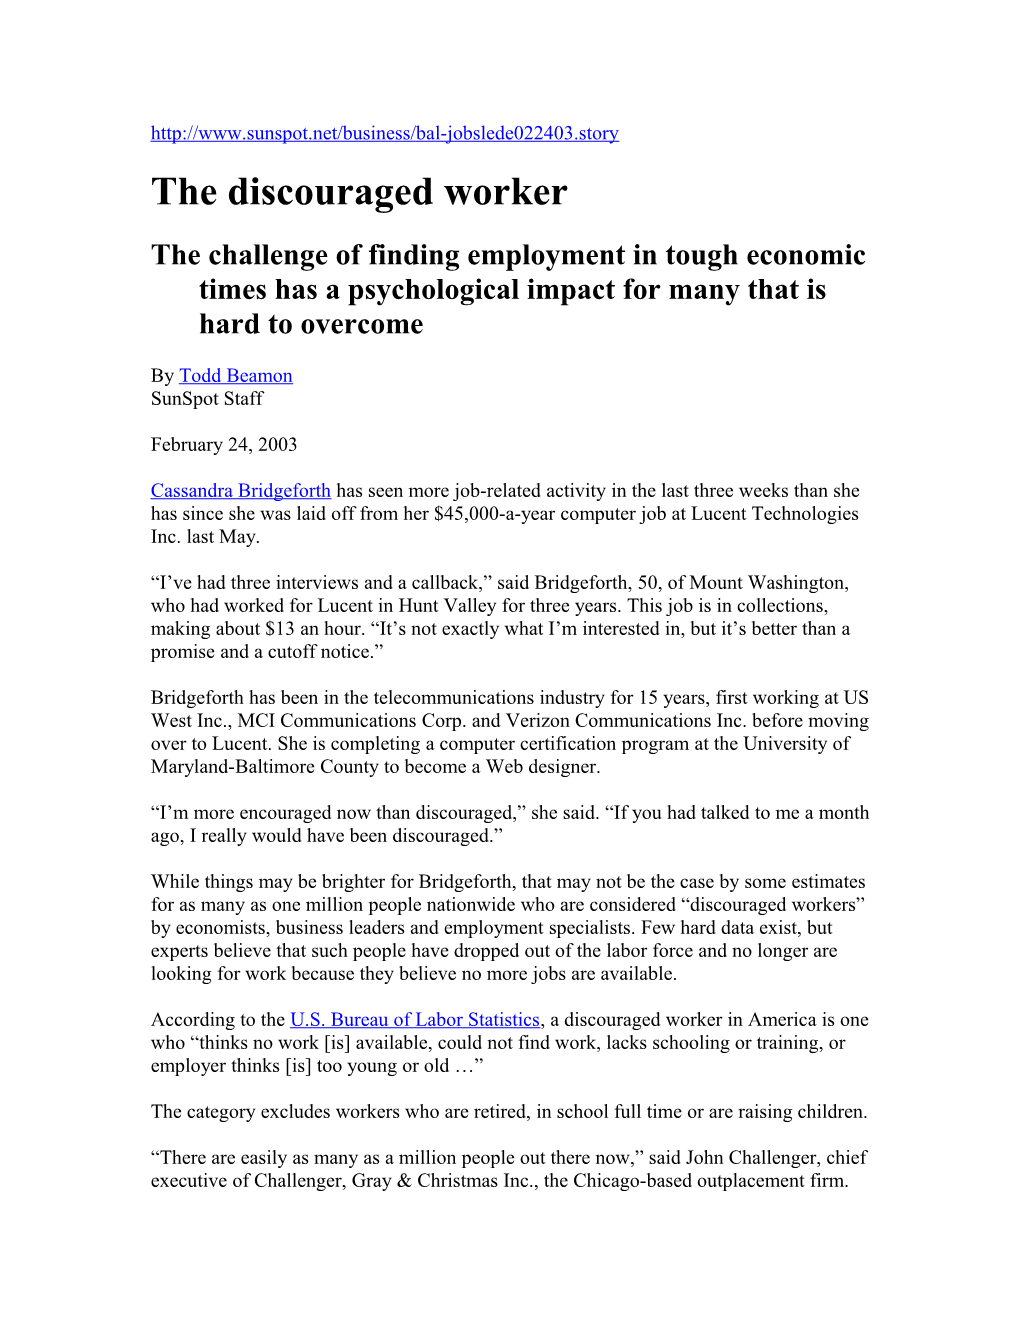 The Discouraged Worker